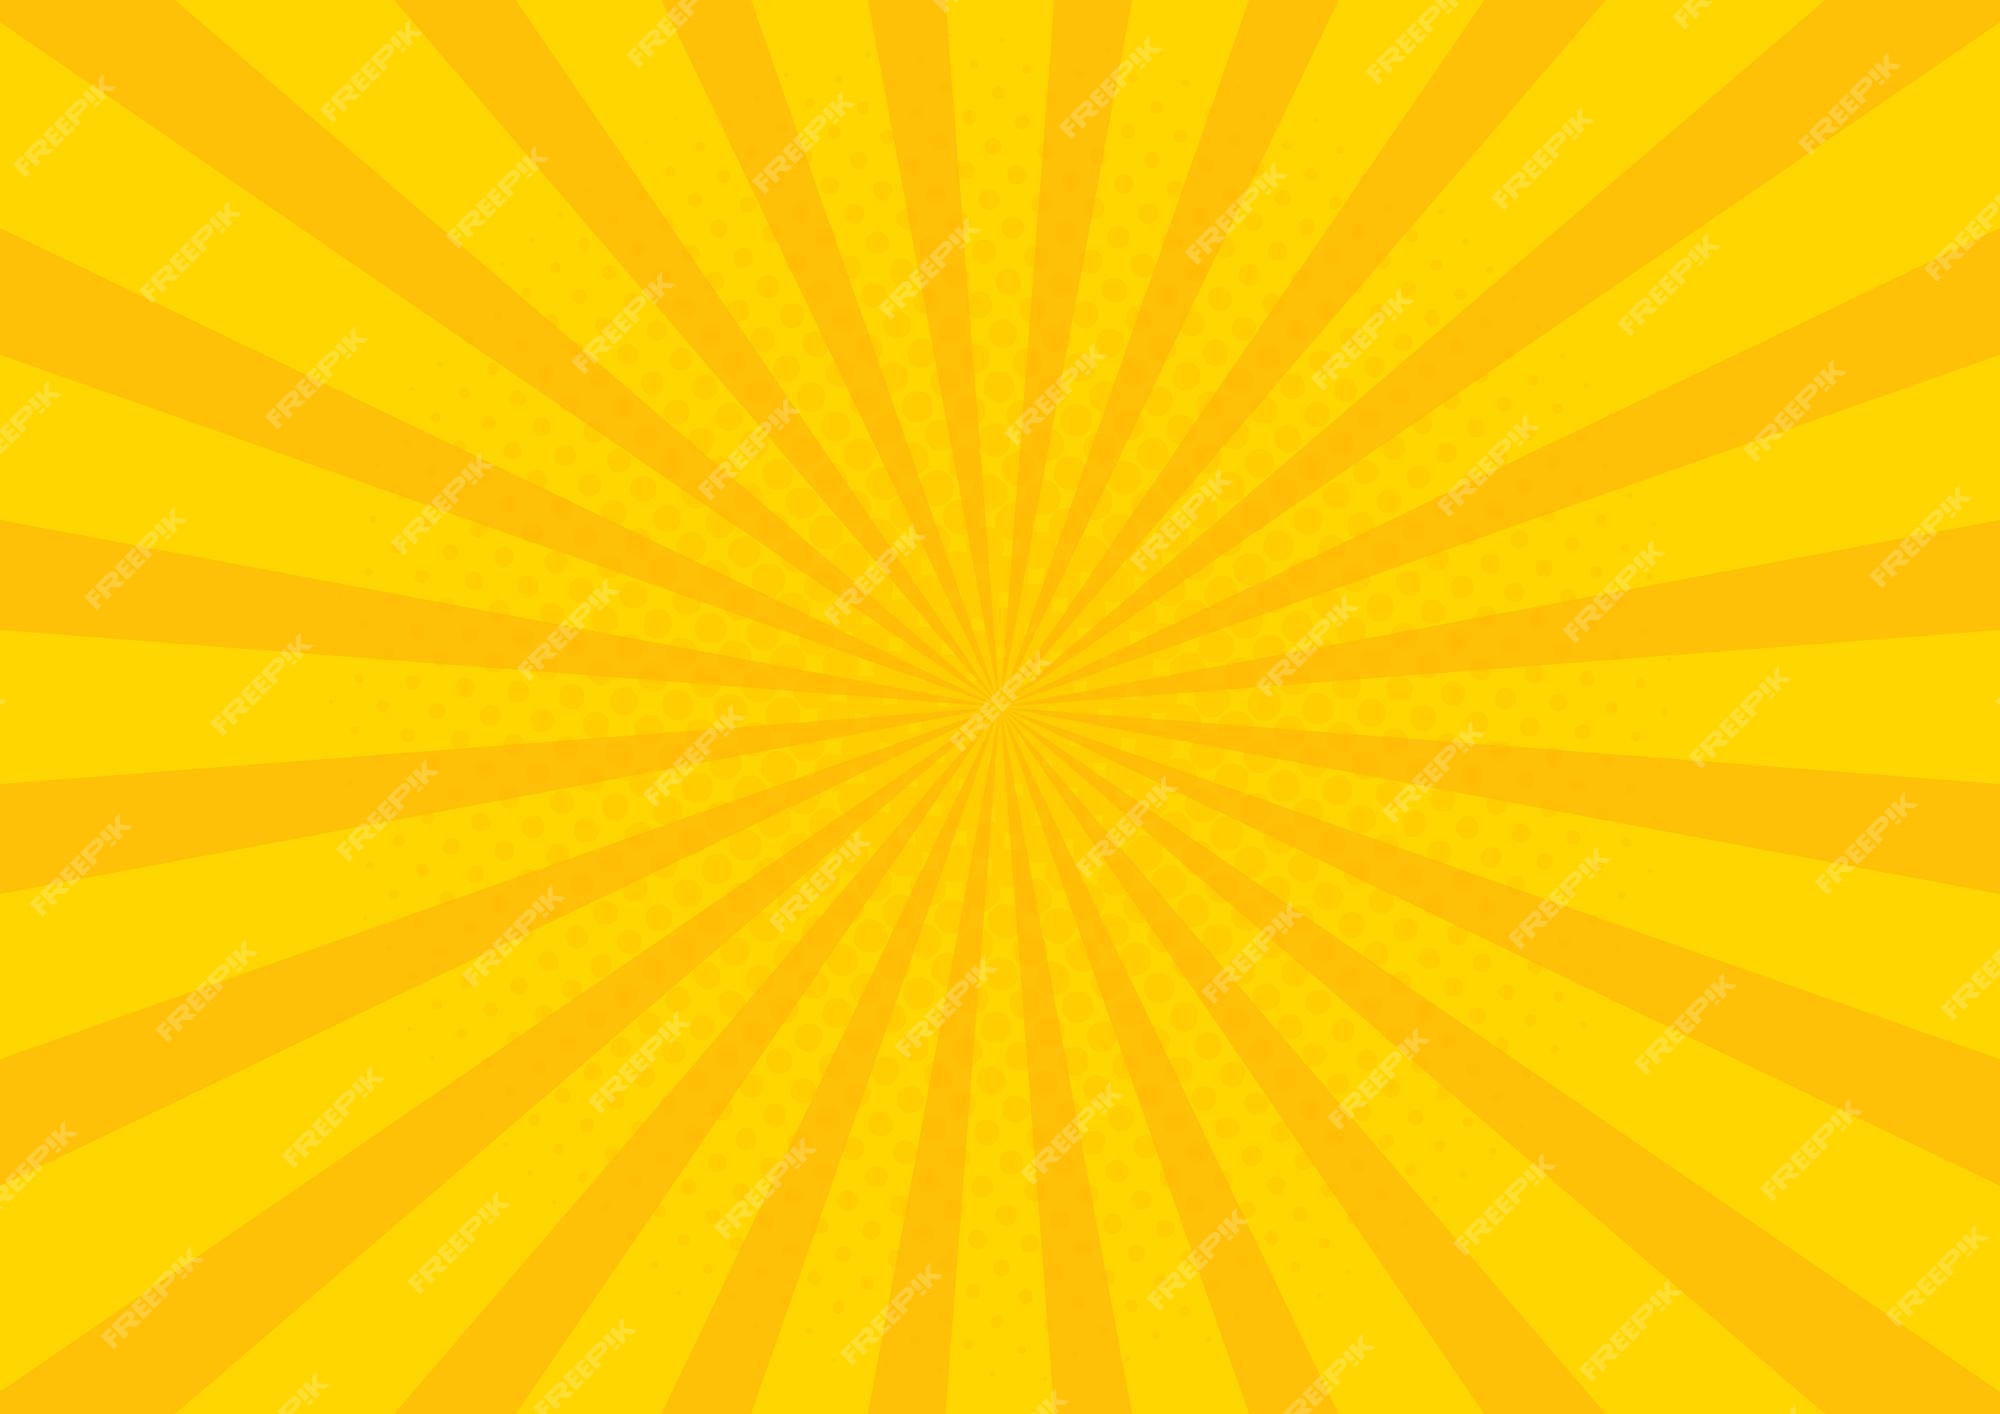 Yellow Sun Ray Images - Free Download on Freepik